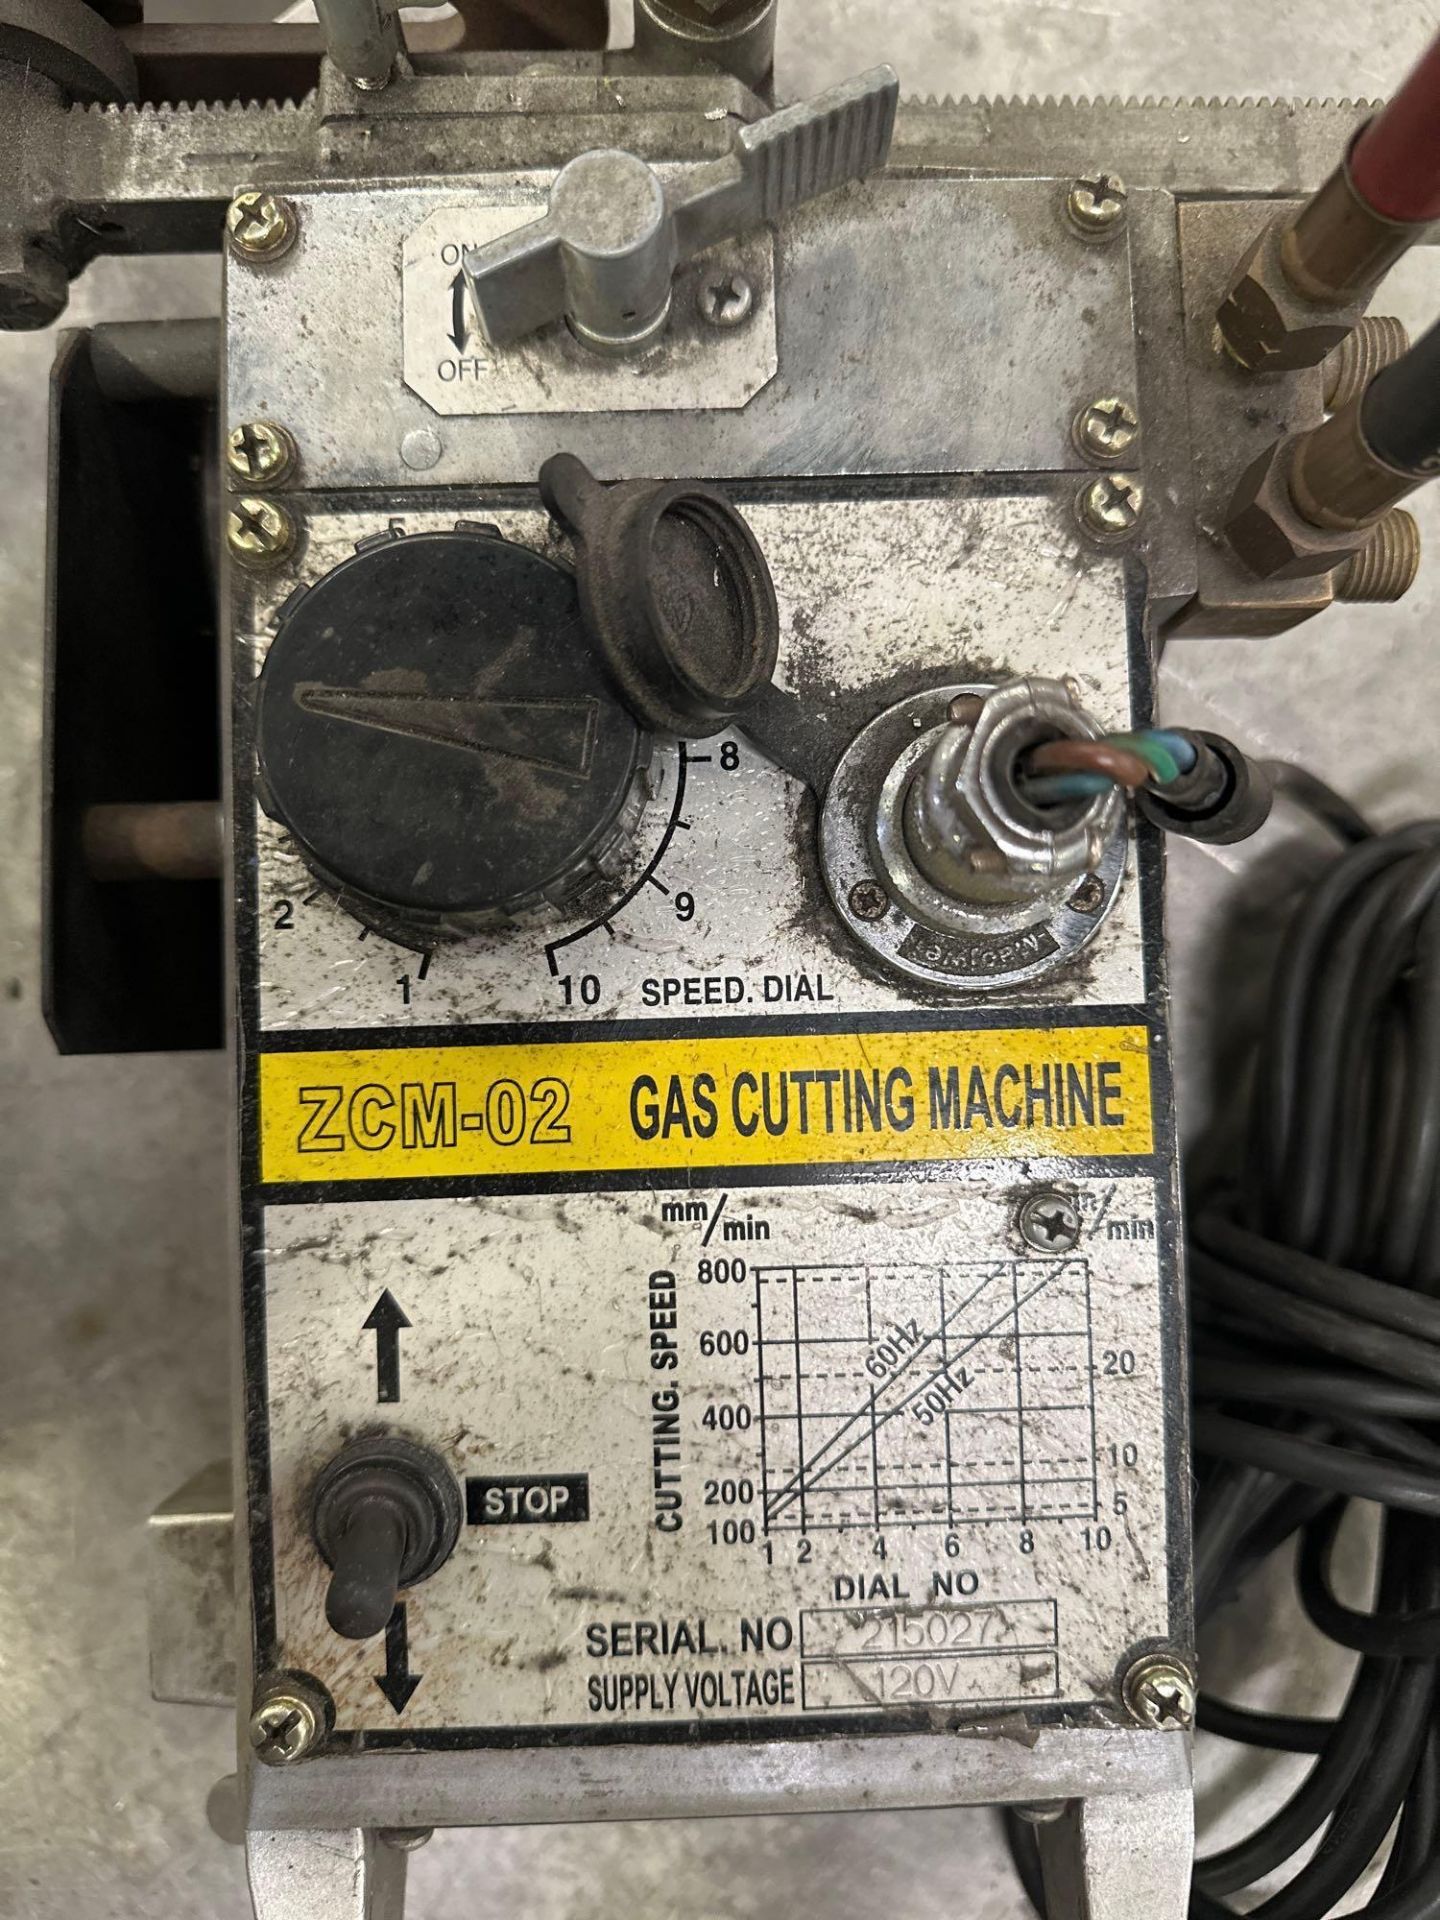 2CM-02 Gas Cutting Machine - Image 4 of 5